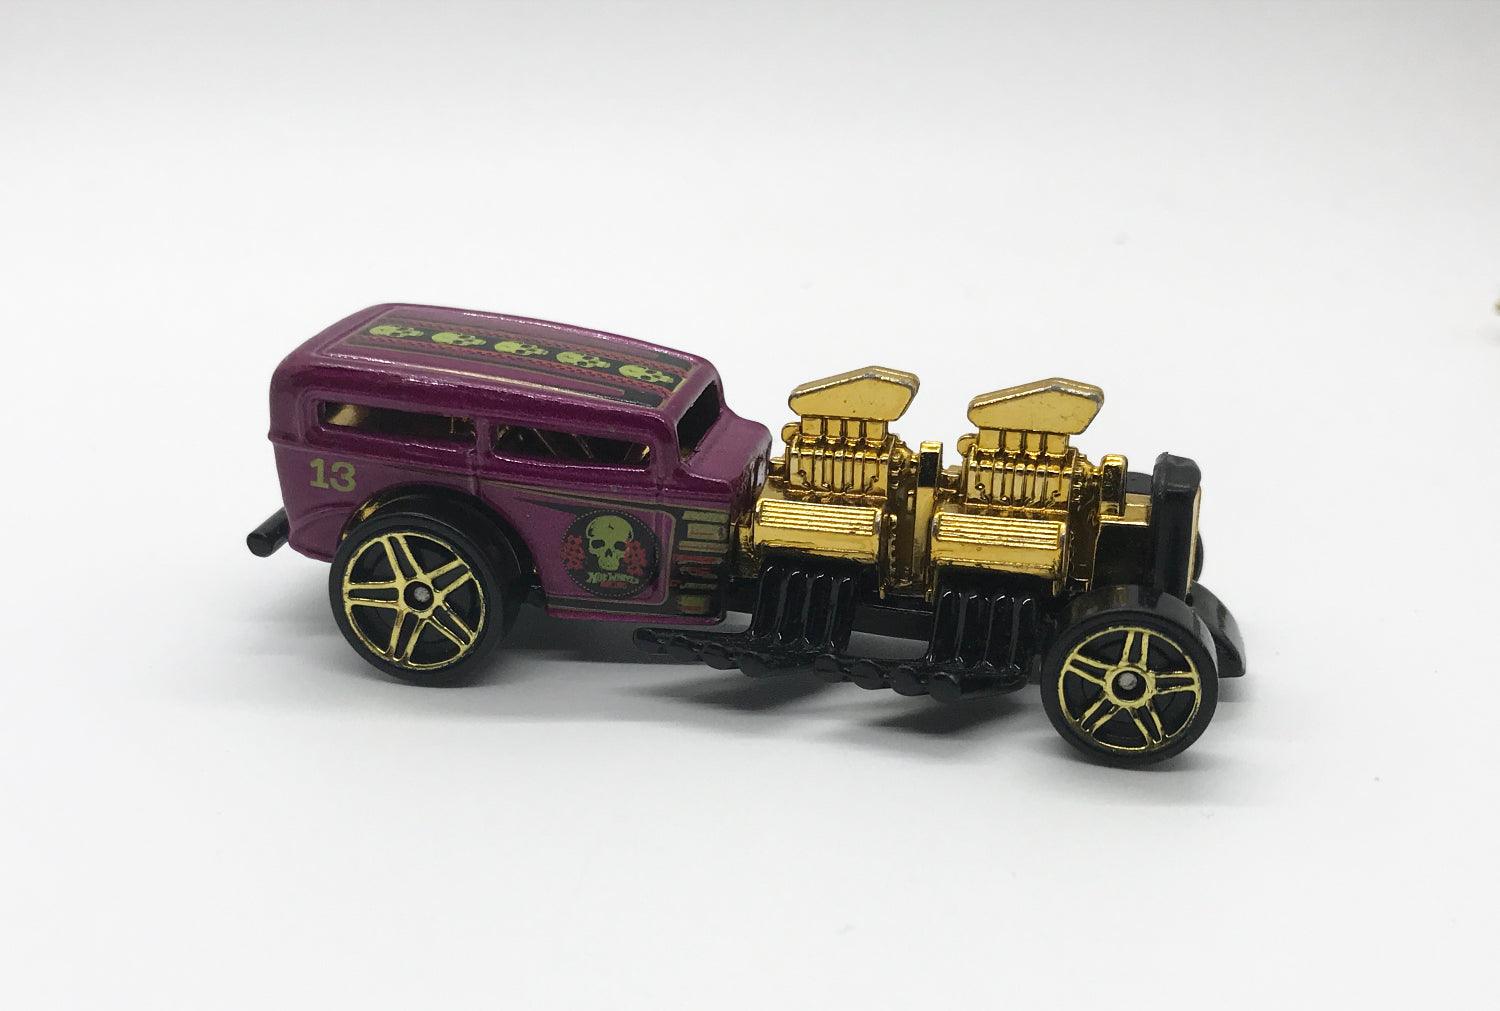 Hot Wheels Metalflake Purple and Gold Way 2 Fast (2009) - Lamoree’s Vintage